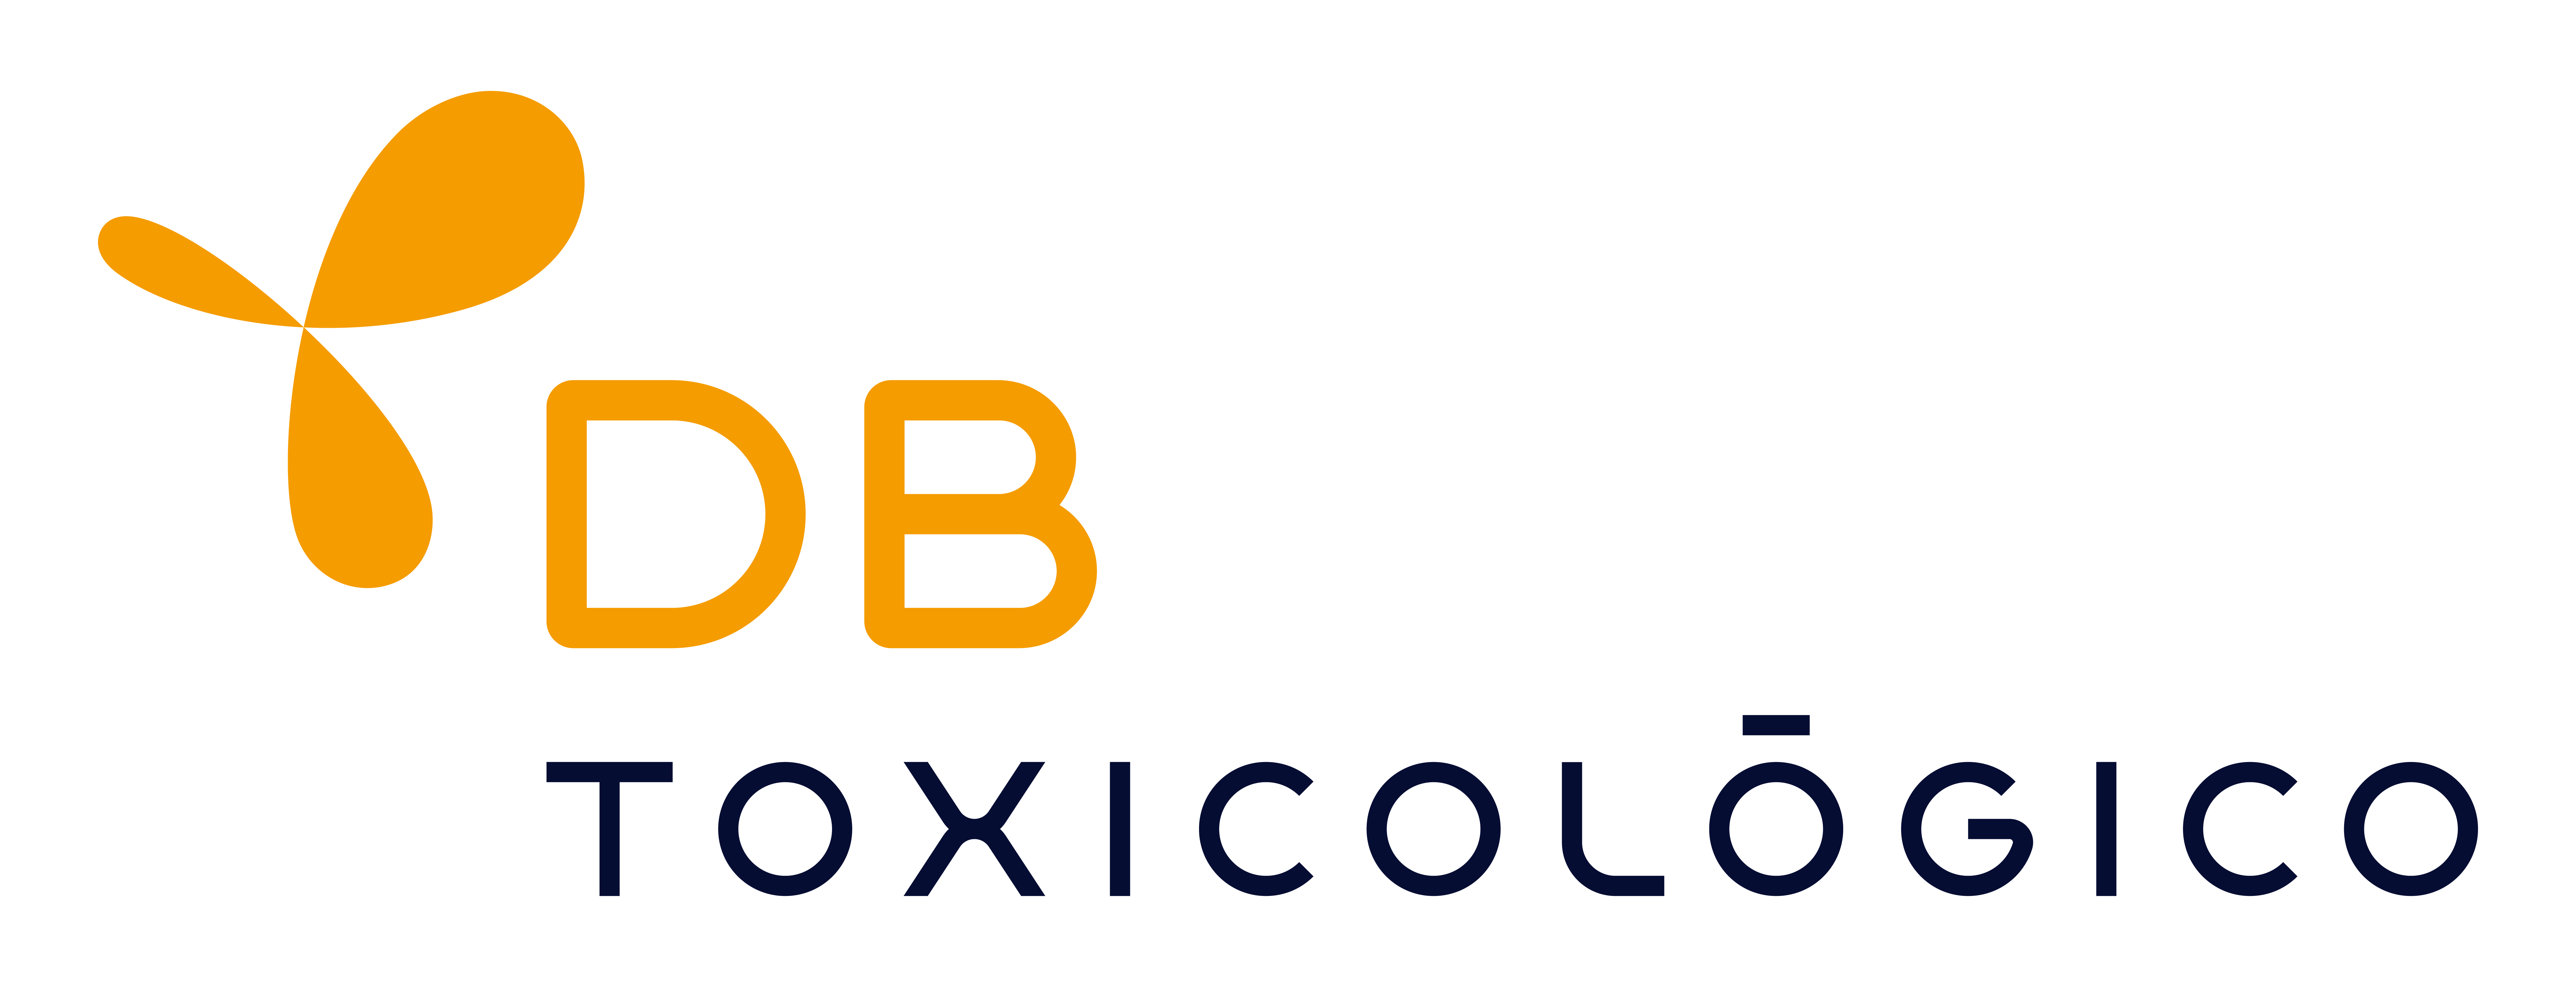 logo db toxicologico